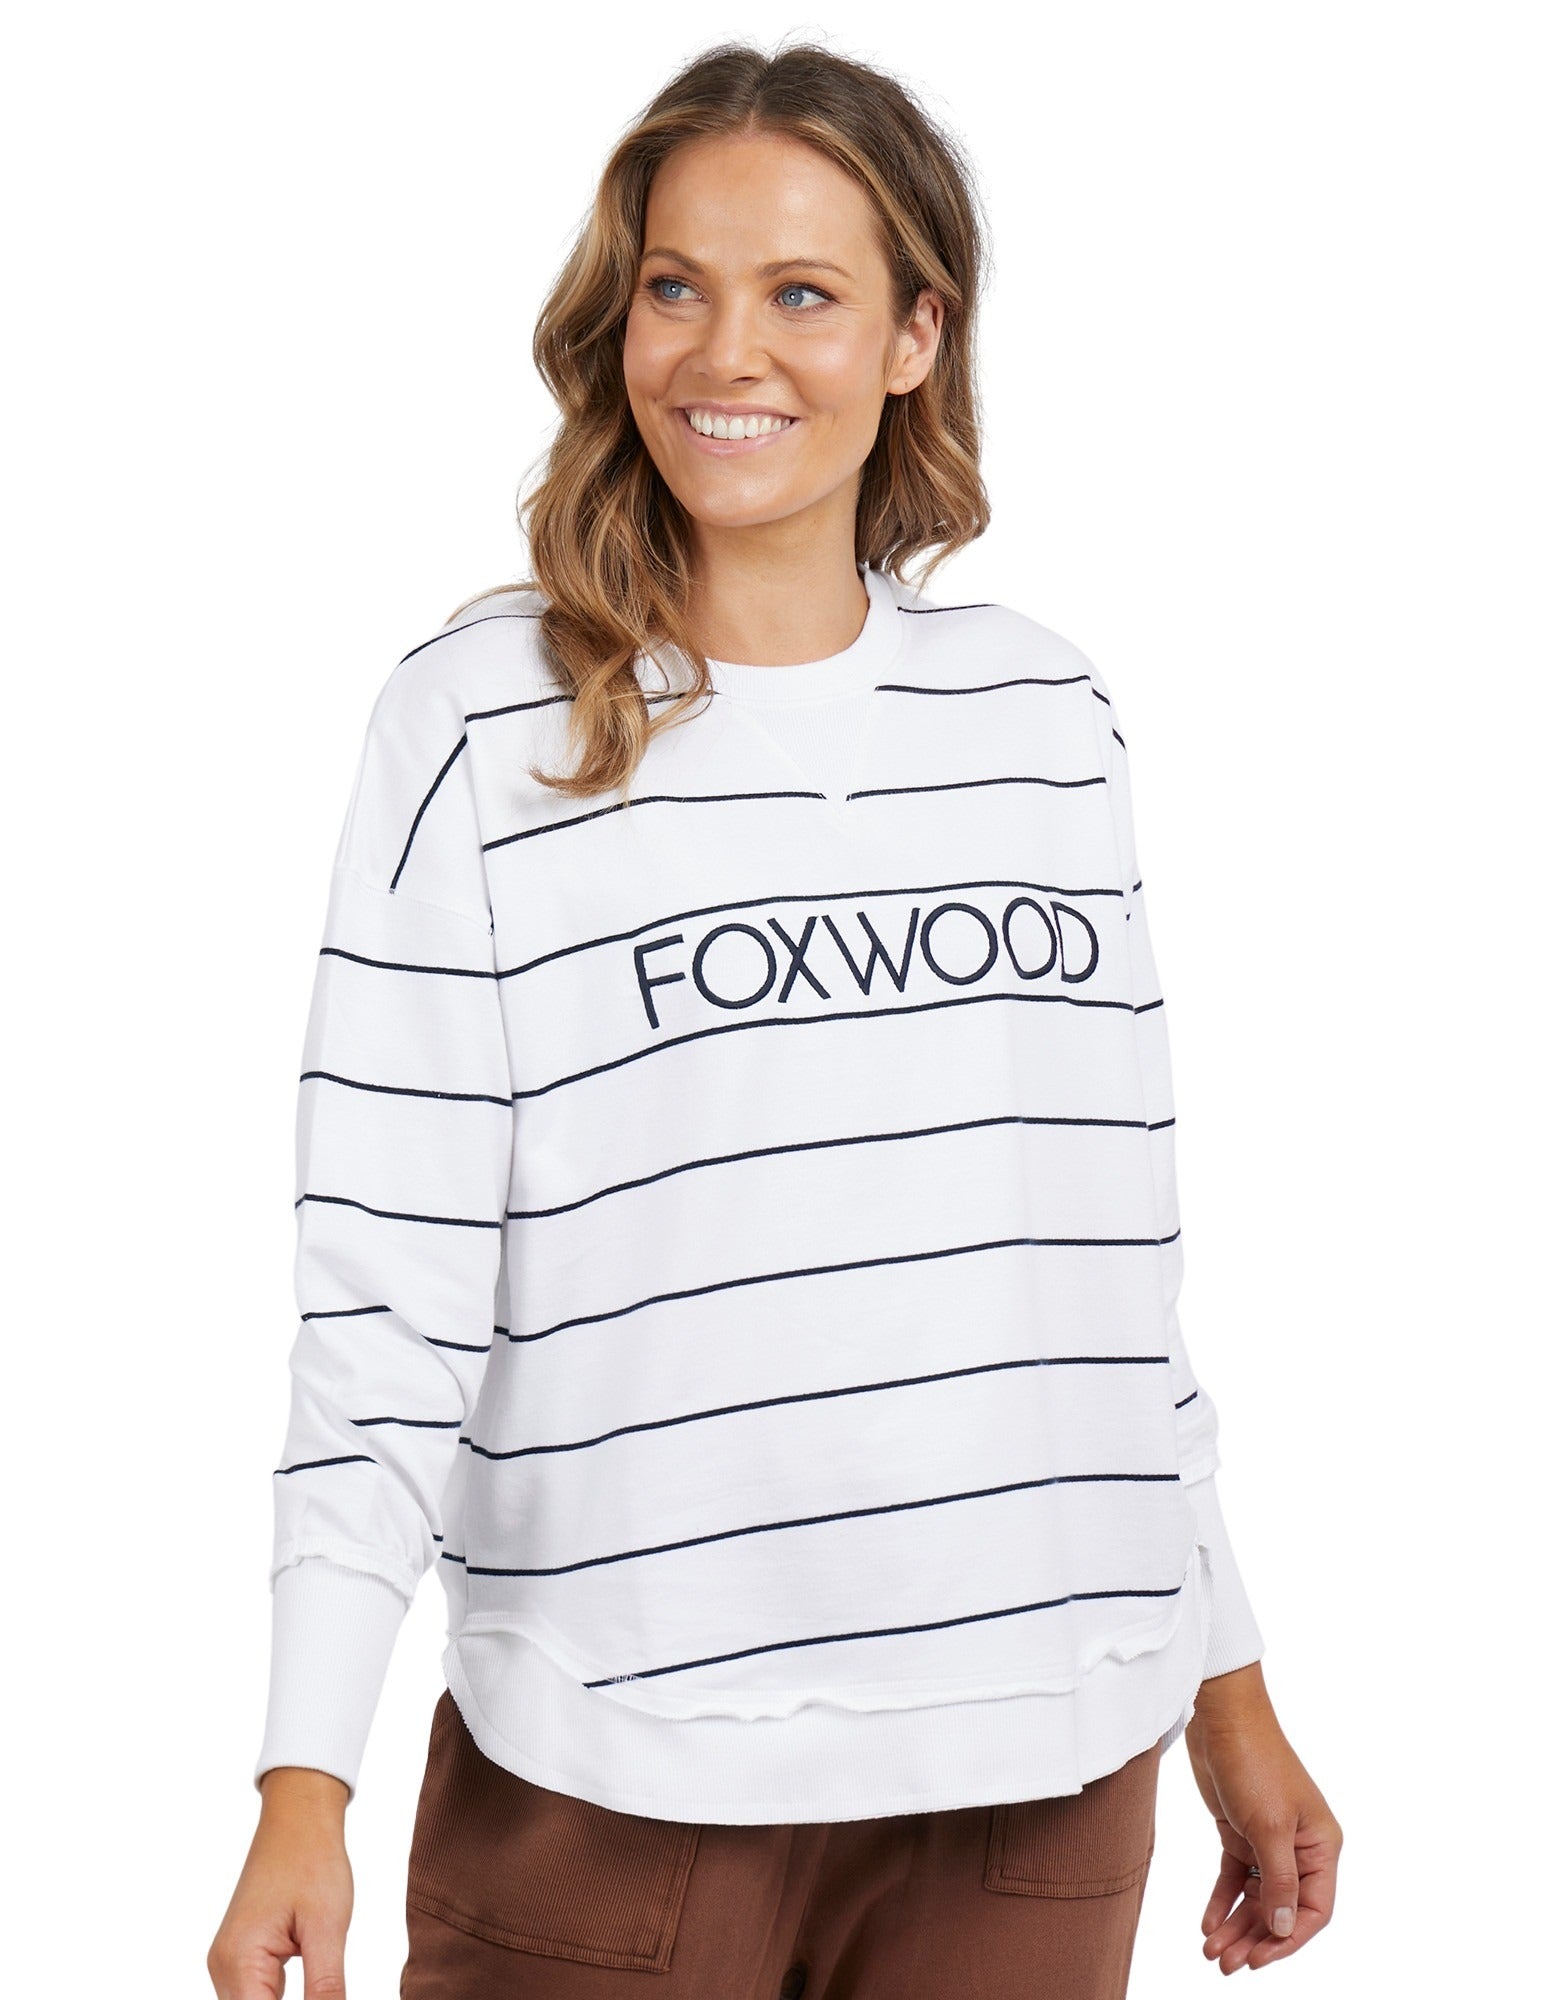 Foxwood Simplified Stripe Crew - White & Navy